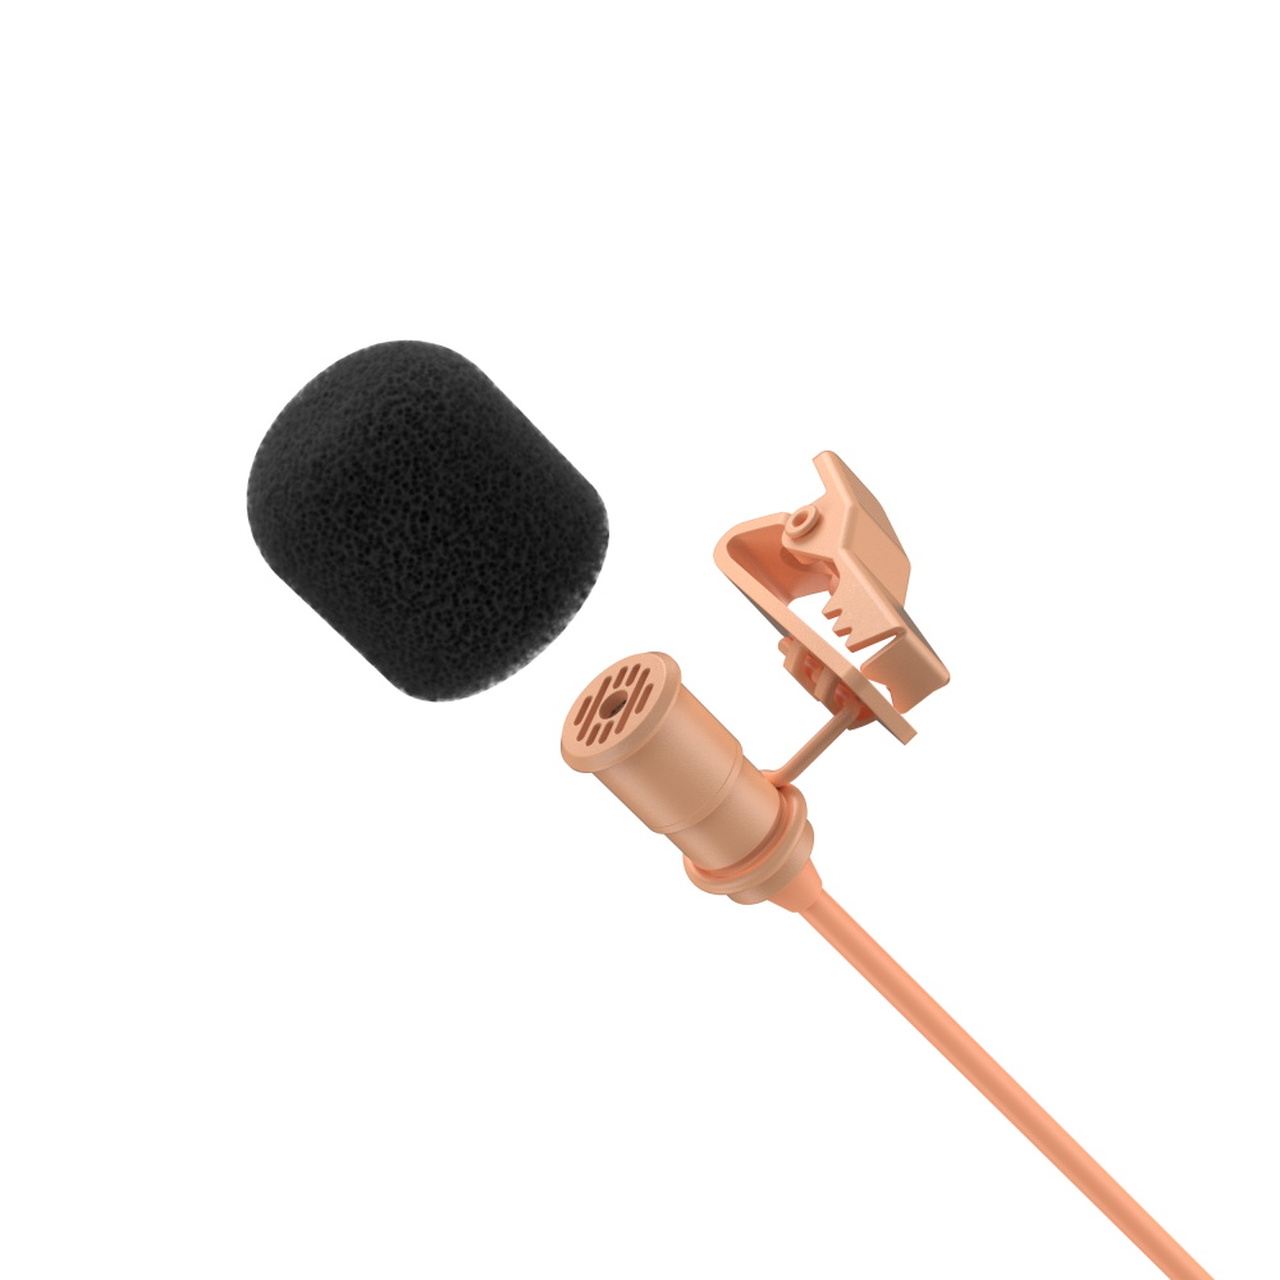 SmallRig 3389 simorr Wave L1 - mikrofon krawatowy na 3.5mm (kremowy) - PROMOCJA